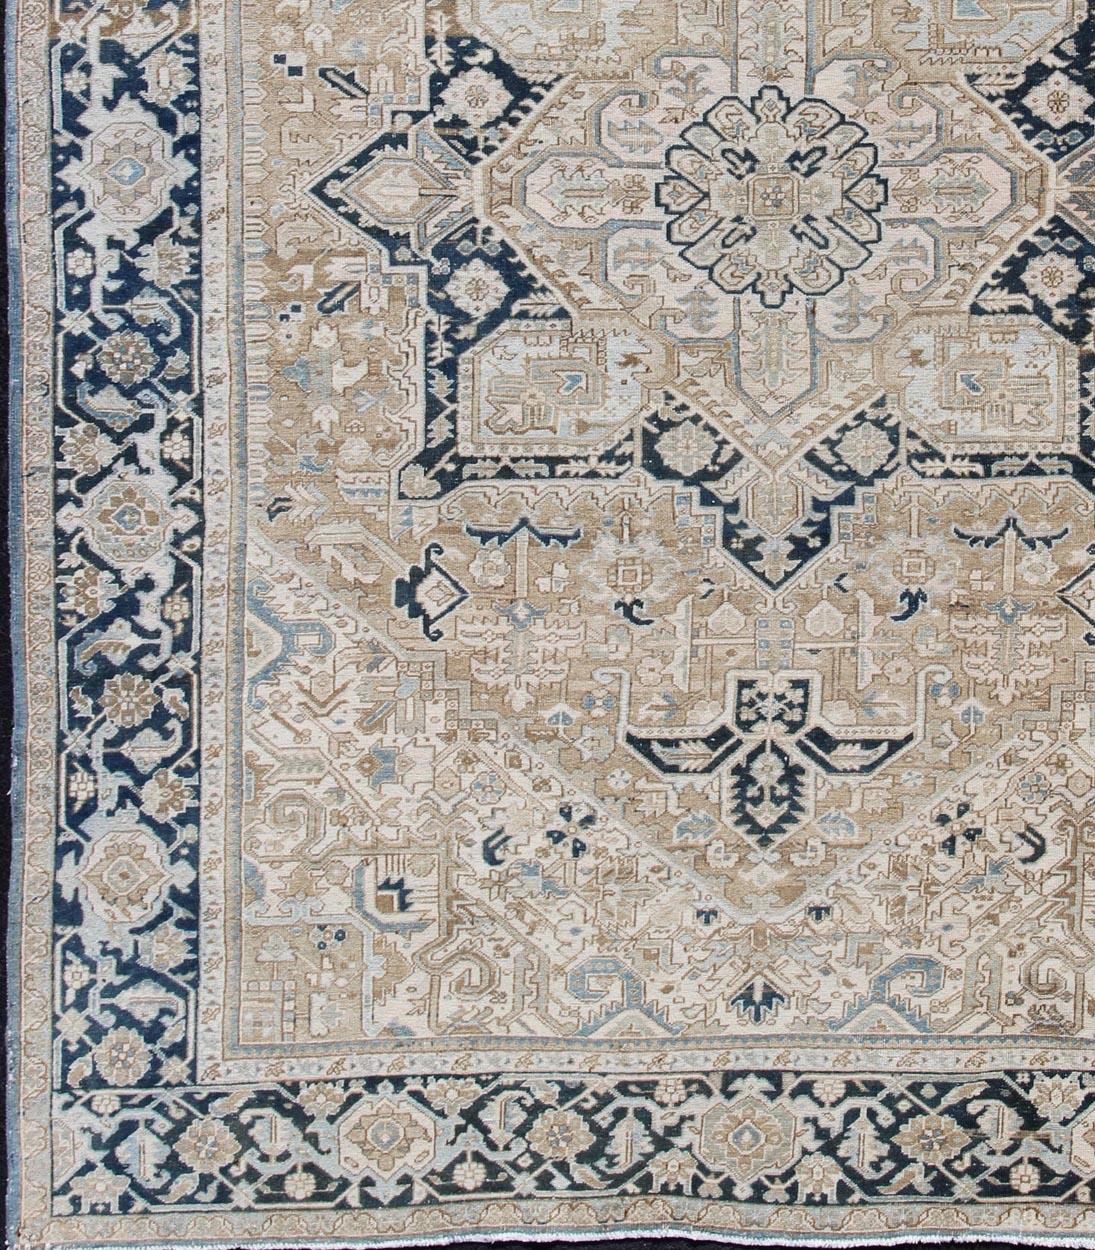 Intricately designed geometric Persian Heriz carpet. Antique Persian Heriz Rug with Geometric Medallion Design in Taupe, Blue-Gray. Keivan Woven Arts / rug 19-0814, country of origin / type: Iran / Heriz, circa 1930
Measures: 10'10 x 14'4.
This